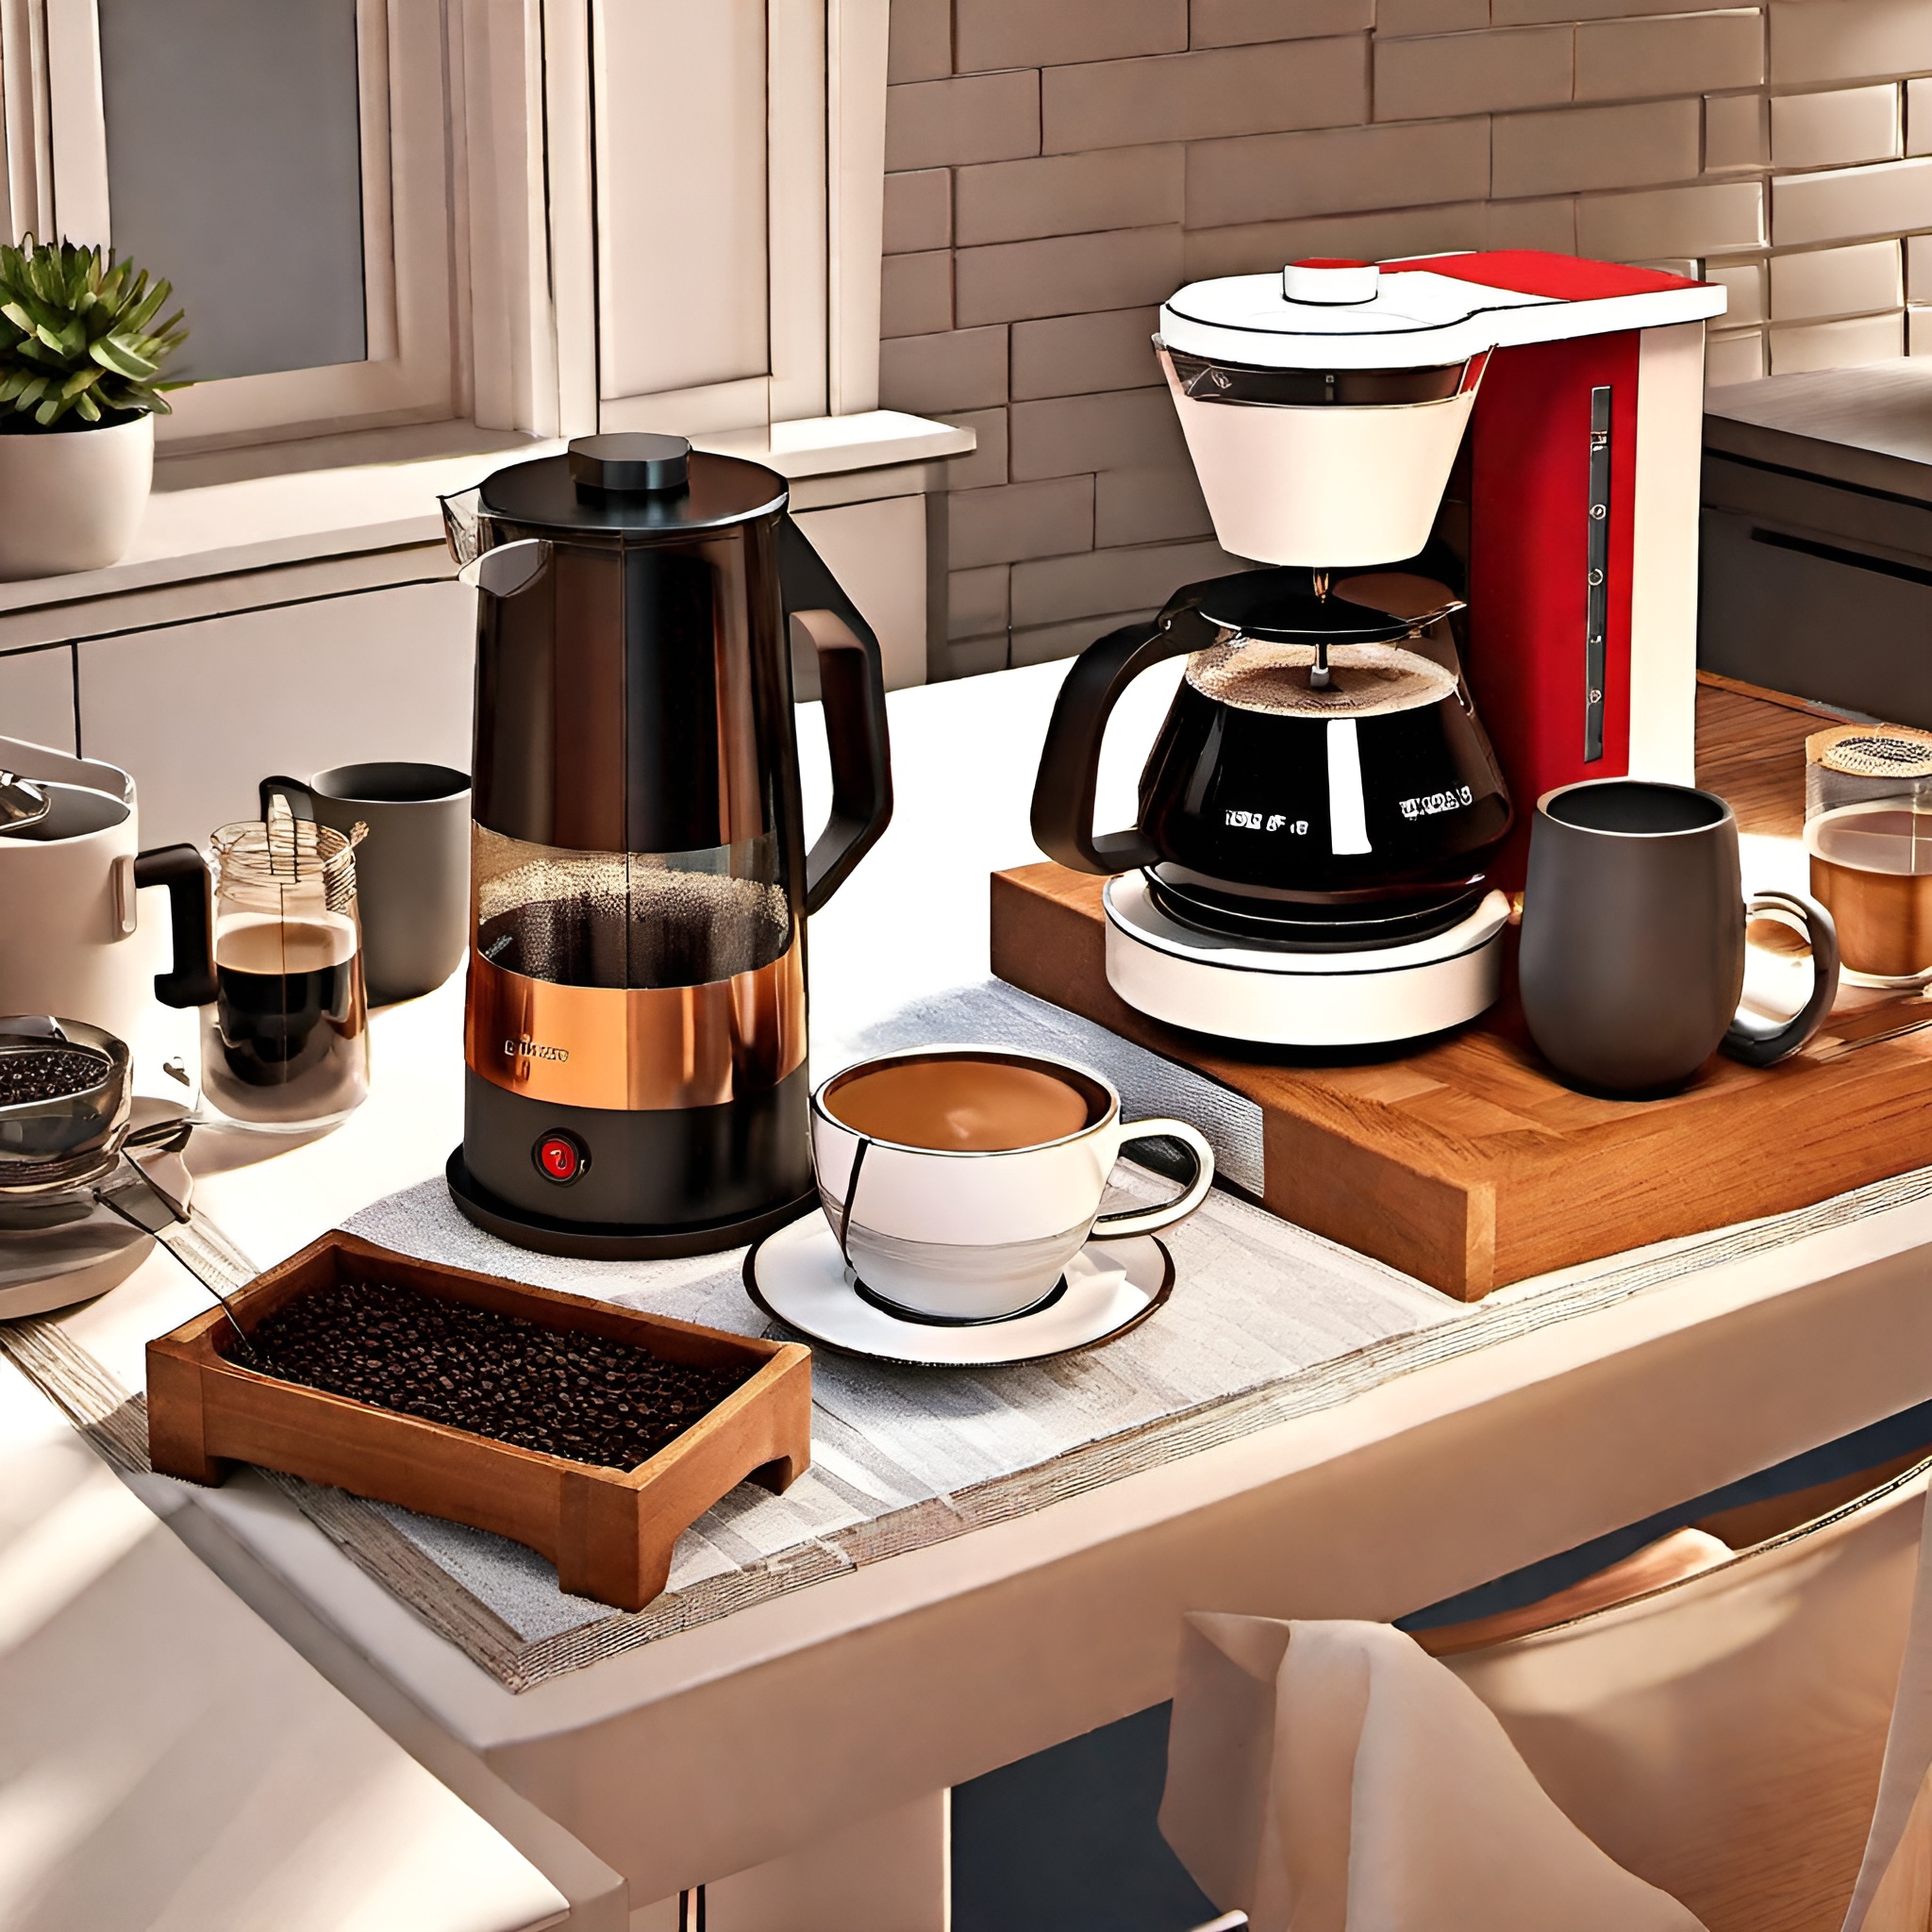 Top 5 Coffee Brewing Methods for Beginners